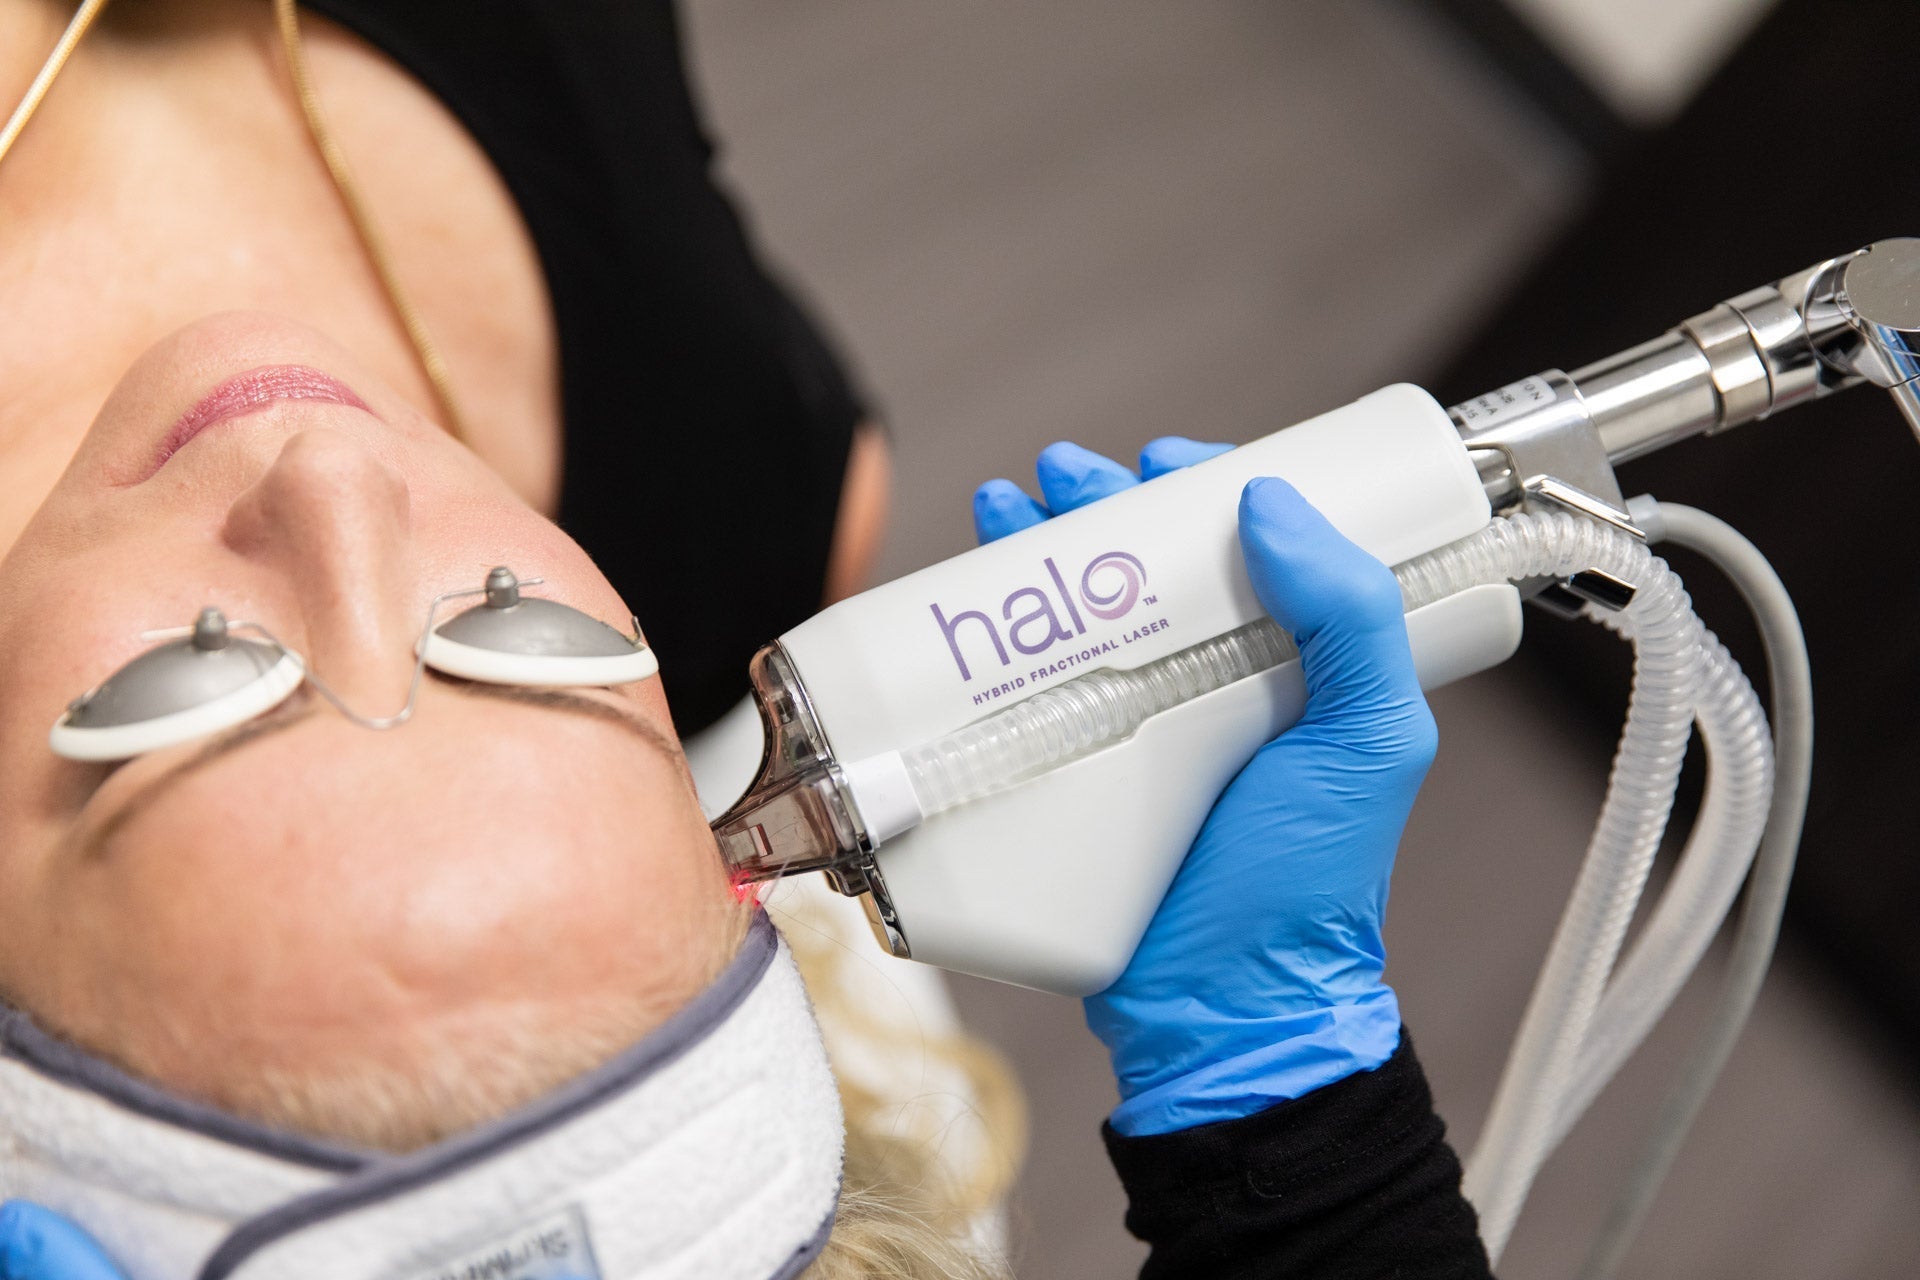 HALO Laser Skin Resurfacing for full face or neck